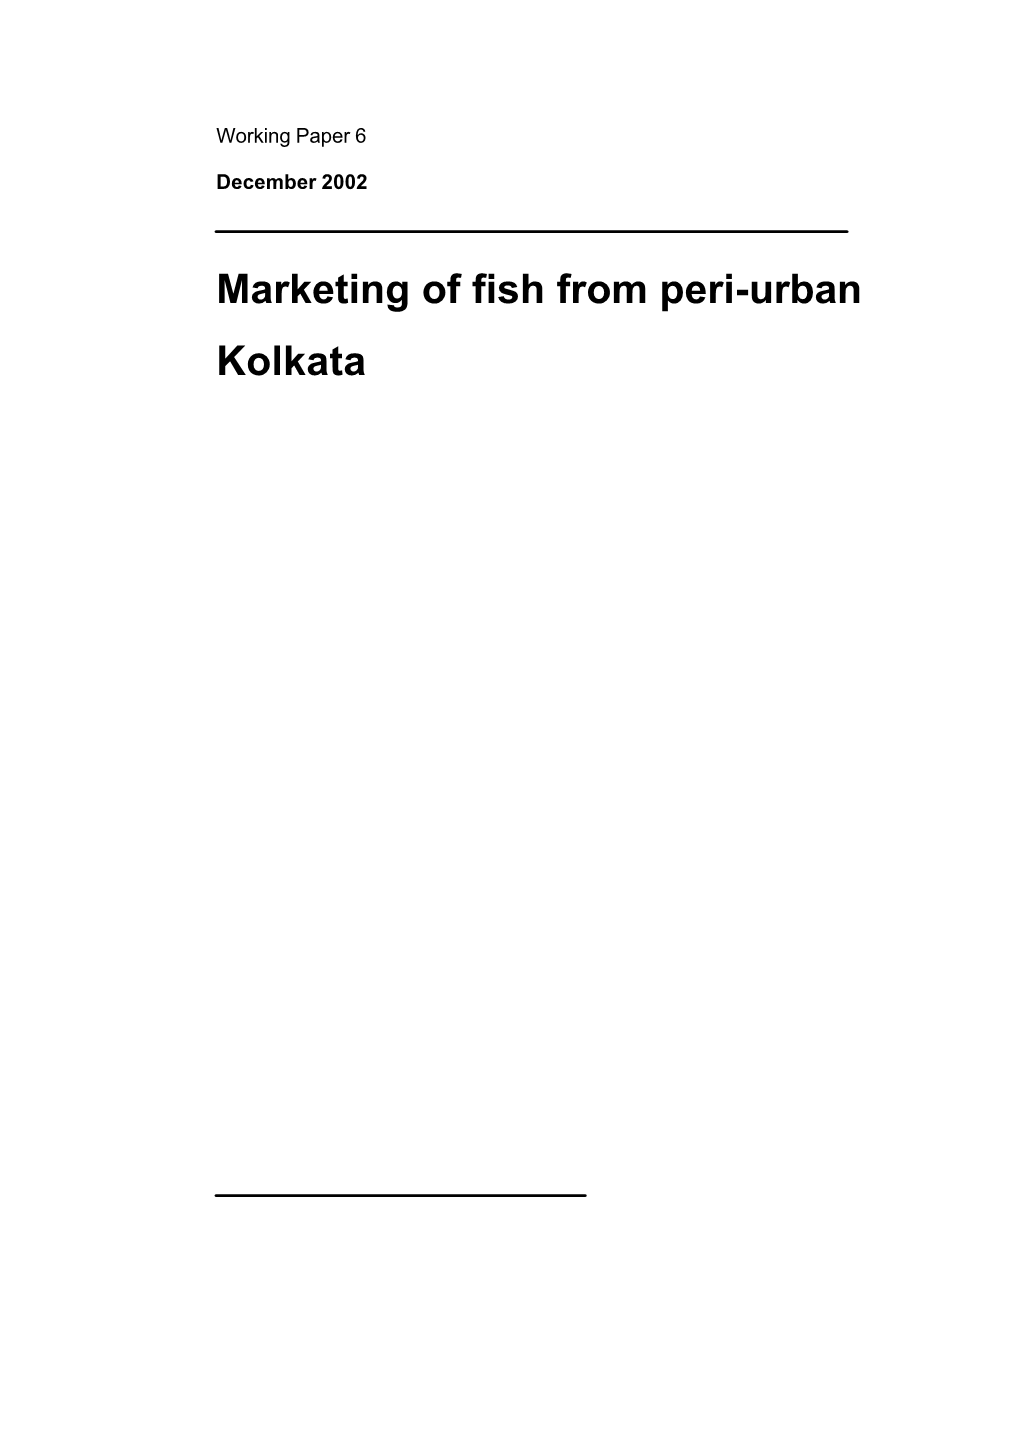 Marketing of Fish from Peri-Urban Kolkata